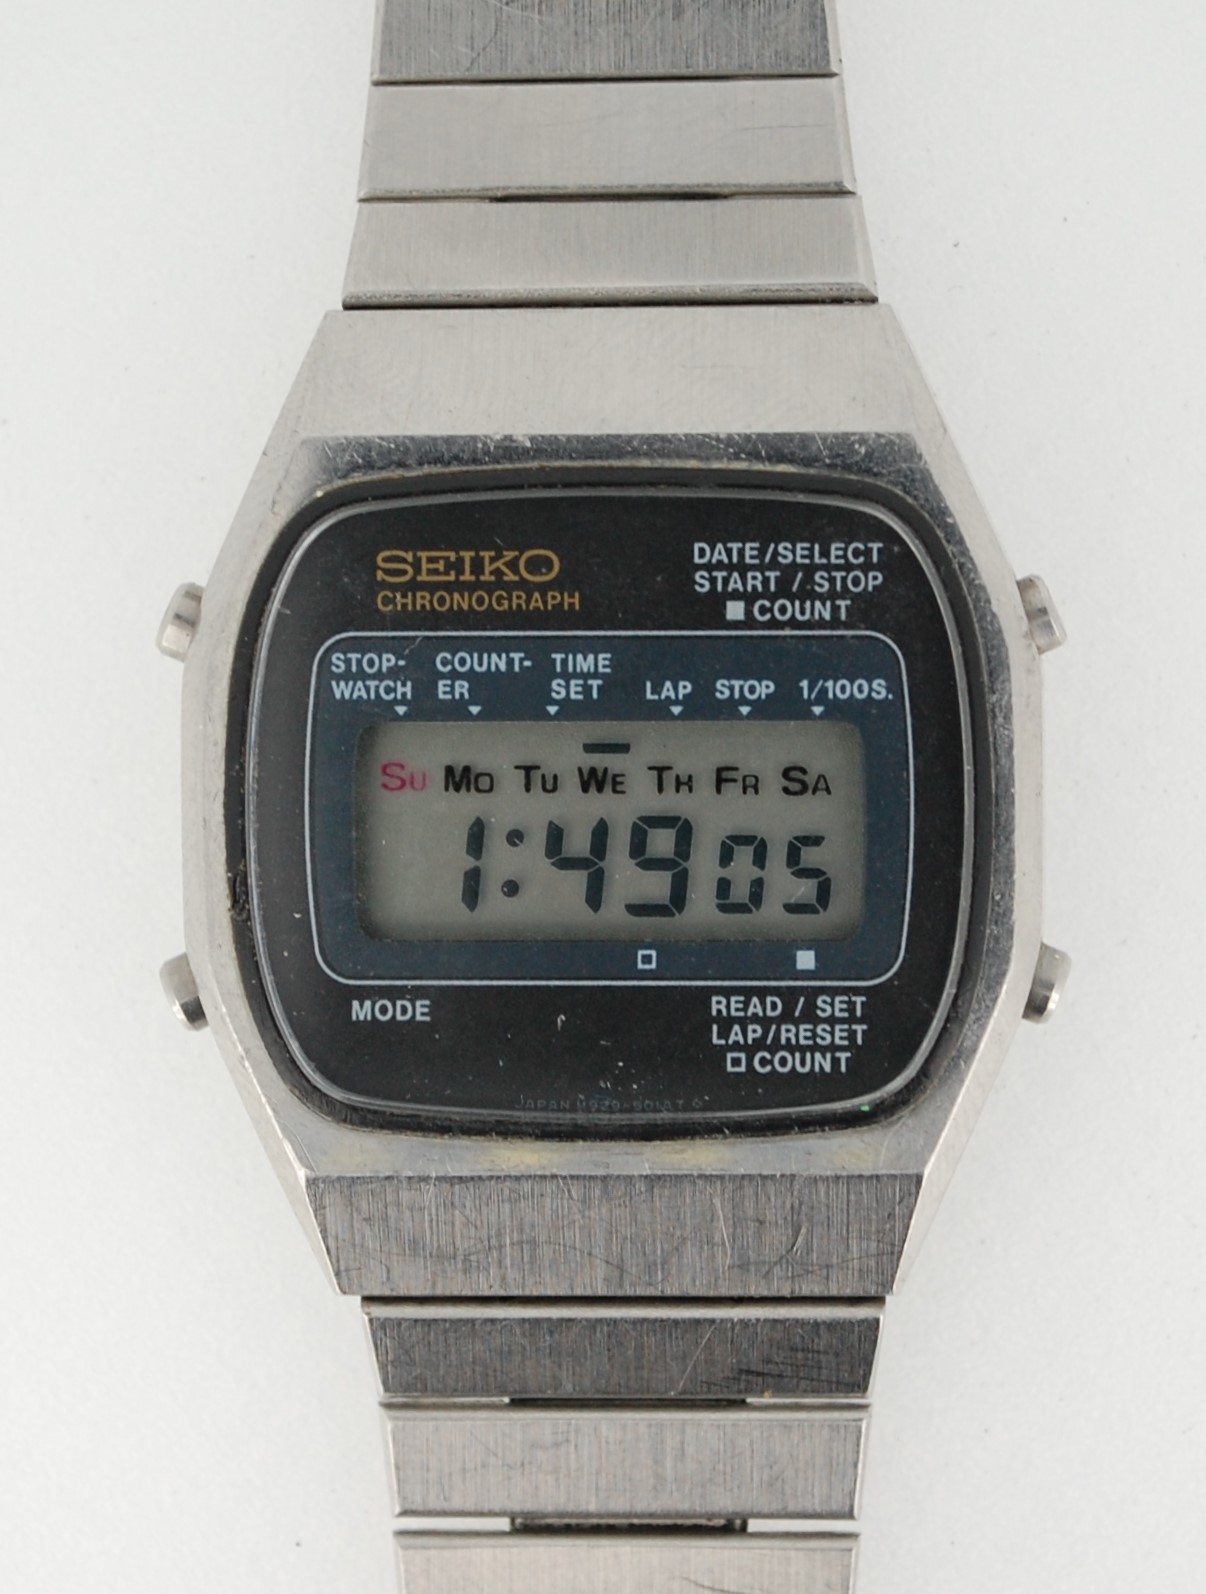 Arriba 82+ imagen seiko digital watch 1980